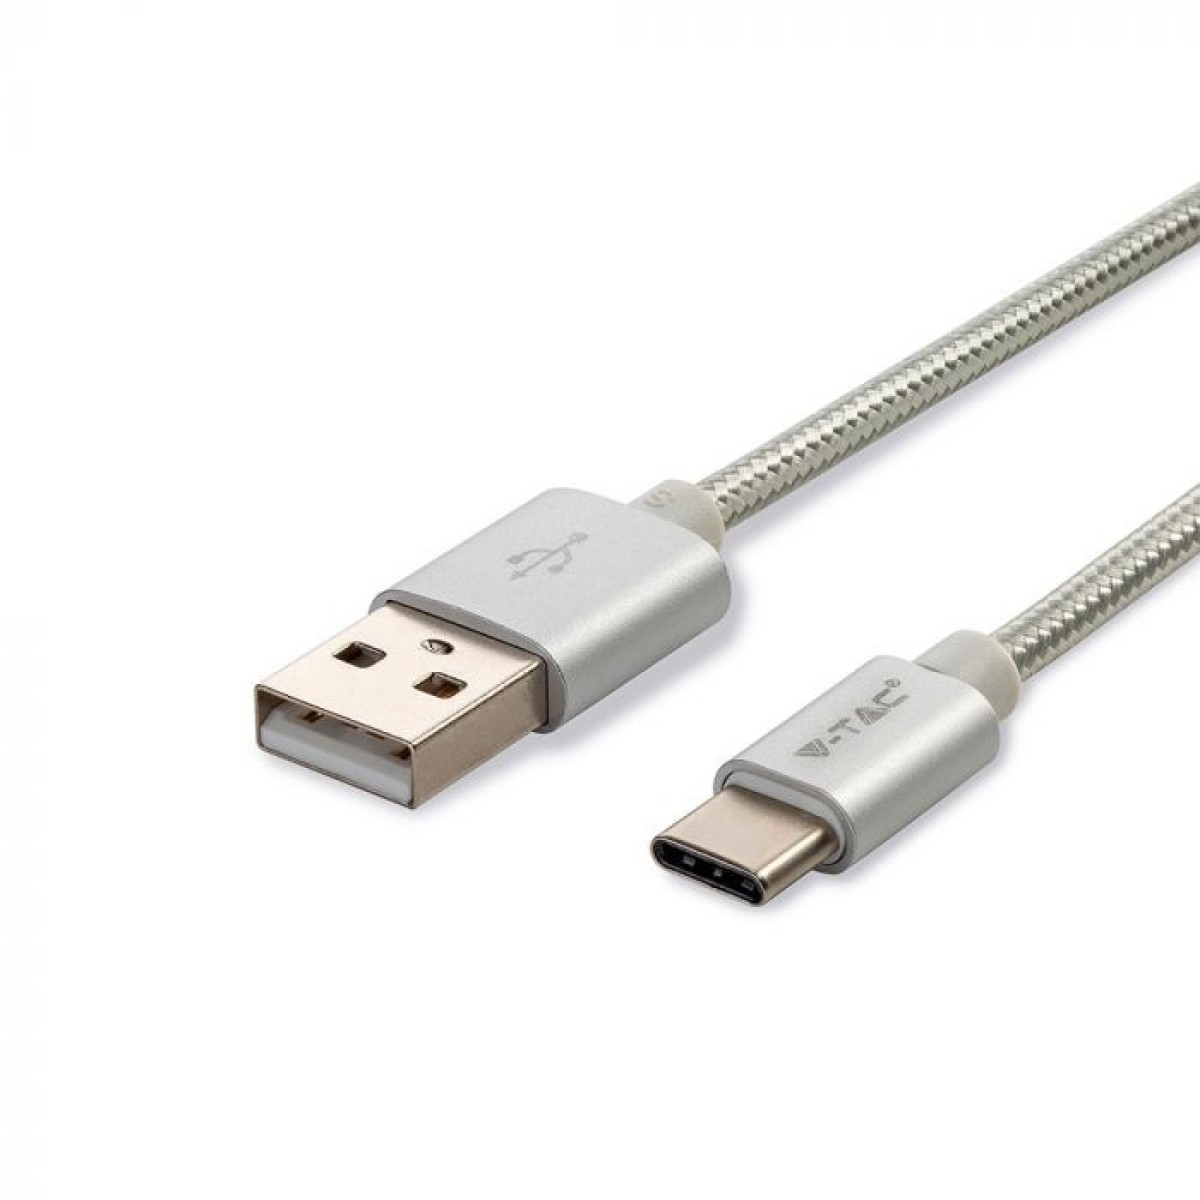 Cablu USB C